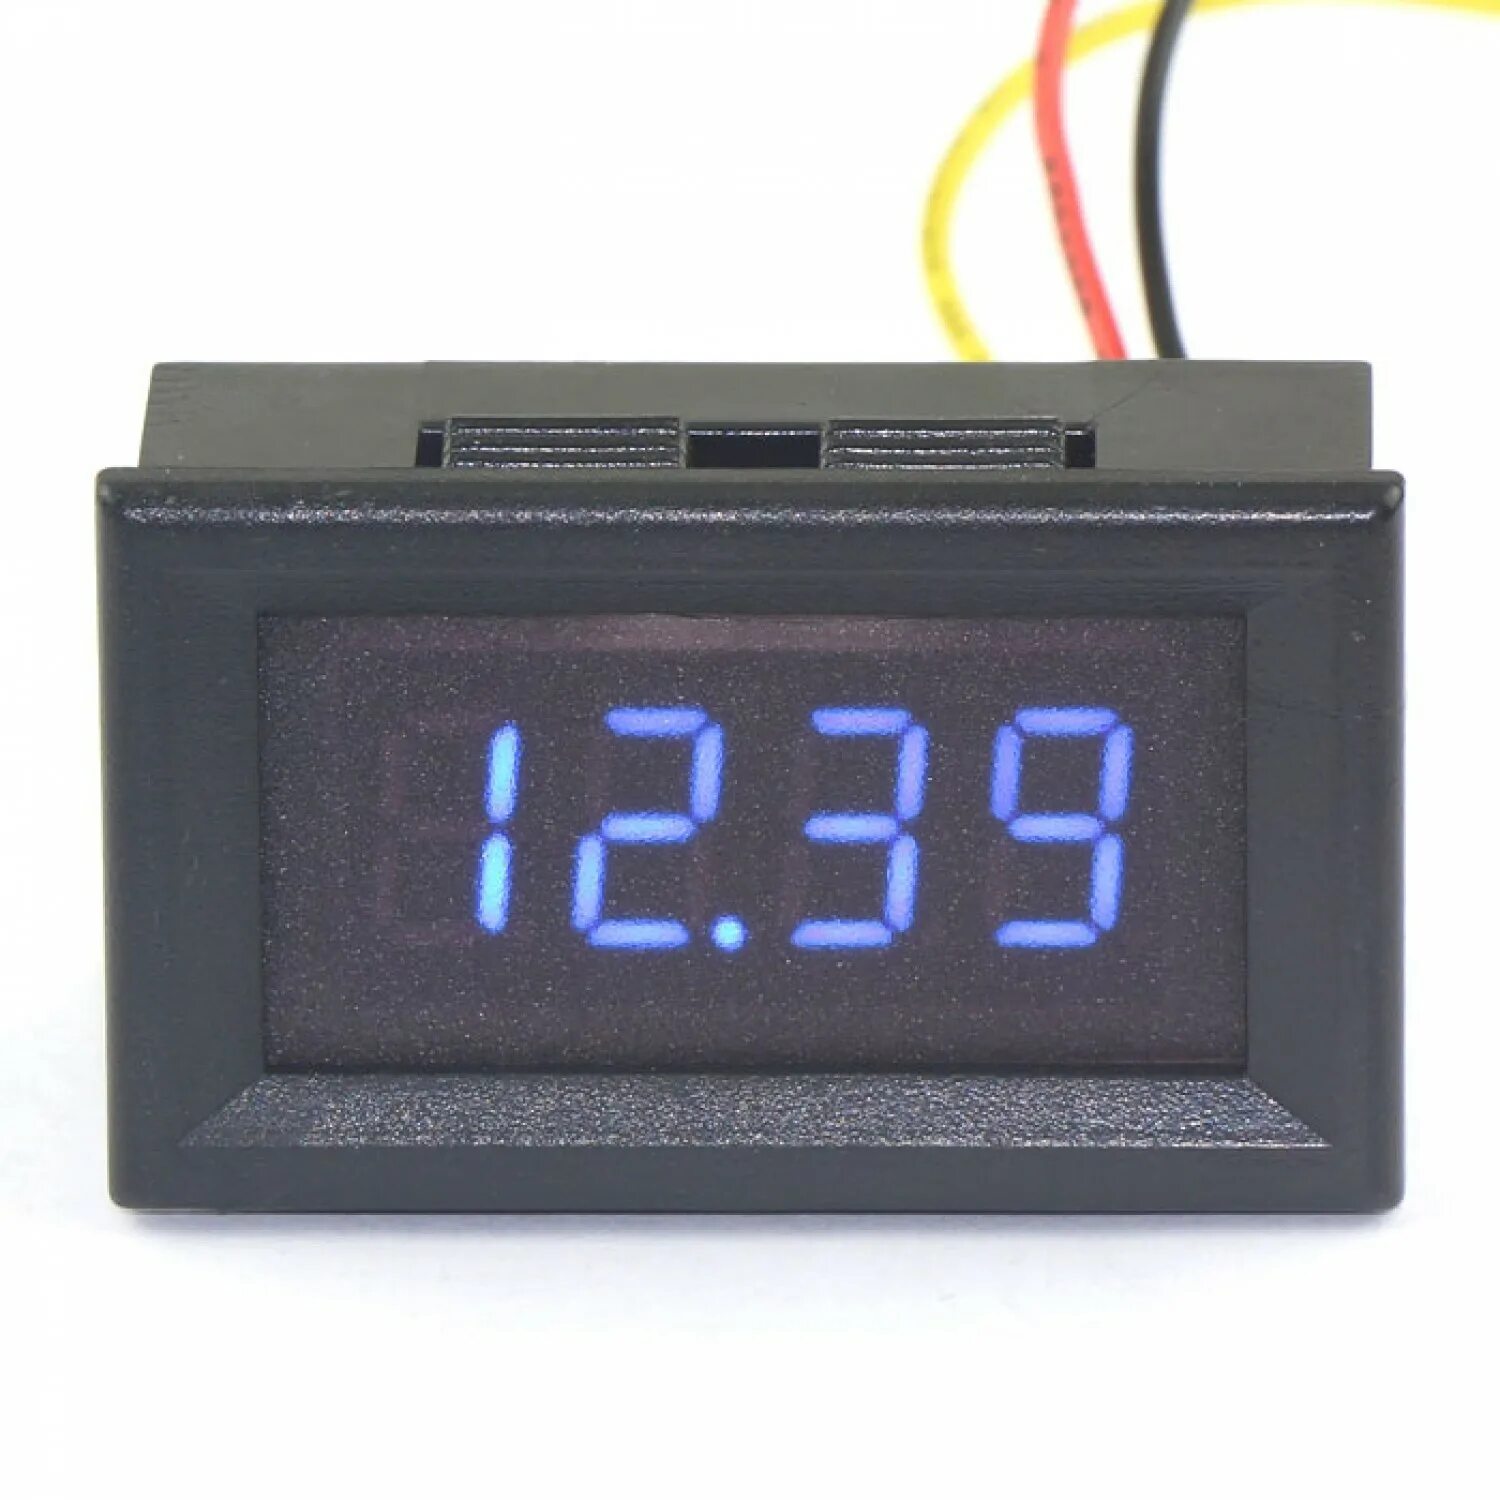 DC 0 33.000V Voltage 0.36" Digital Voltmeter. GDM-8135 вольтметр цифровой. Цифровой вольтметр трехпроводной. DSN-vc288hv 10а.